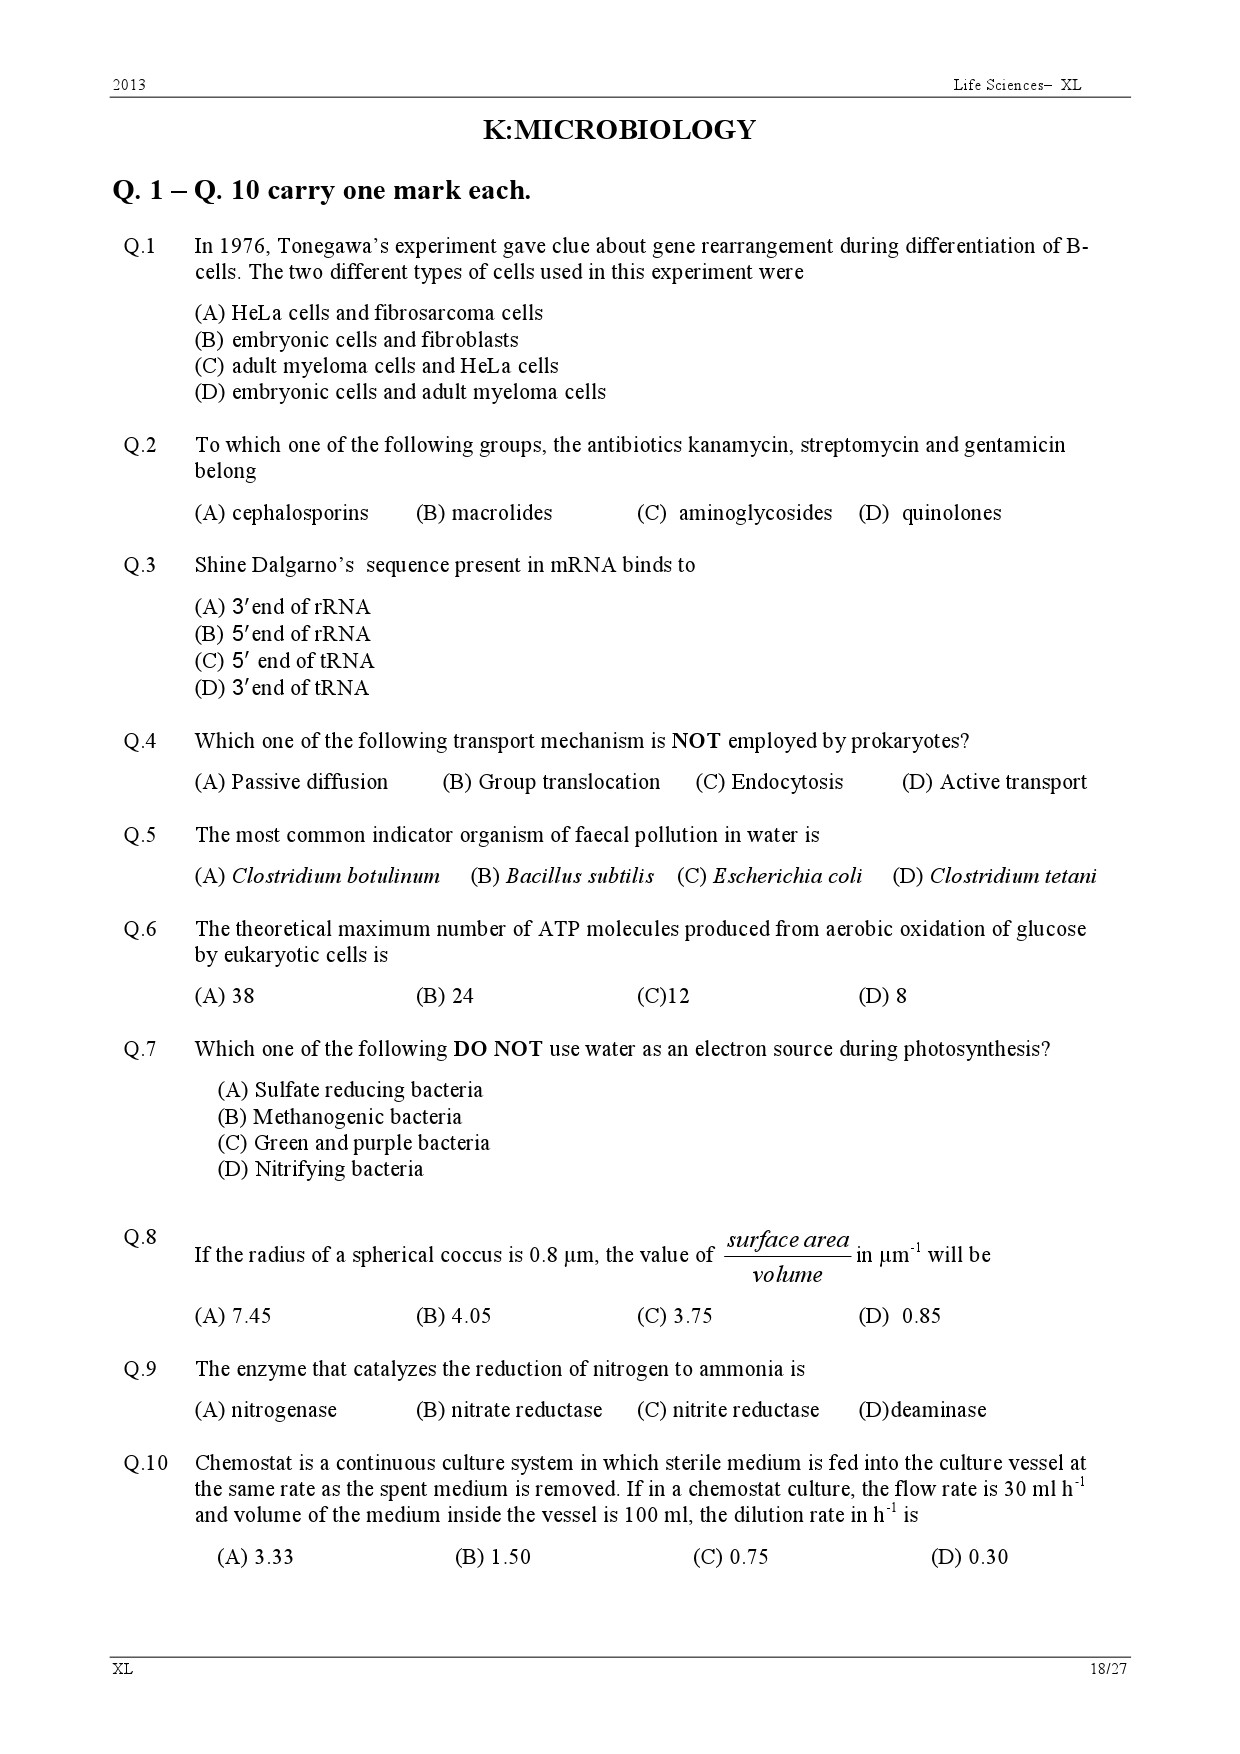 GATE Exam Question Paper 2013 Life Sciences 18